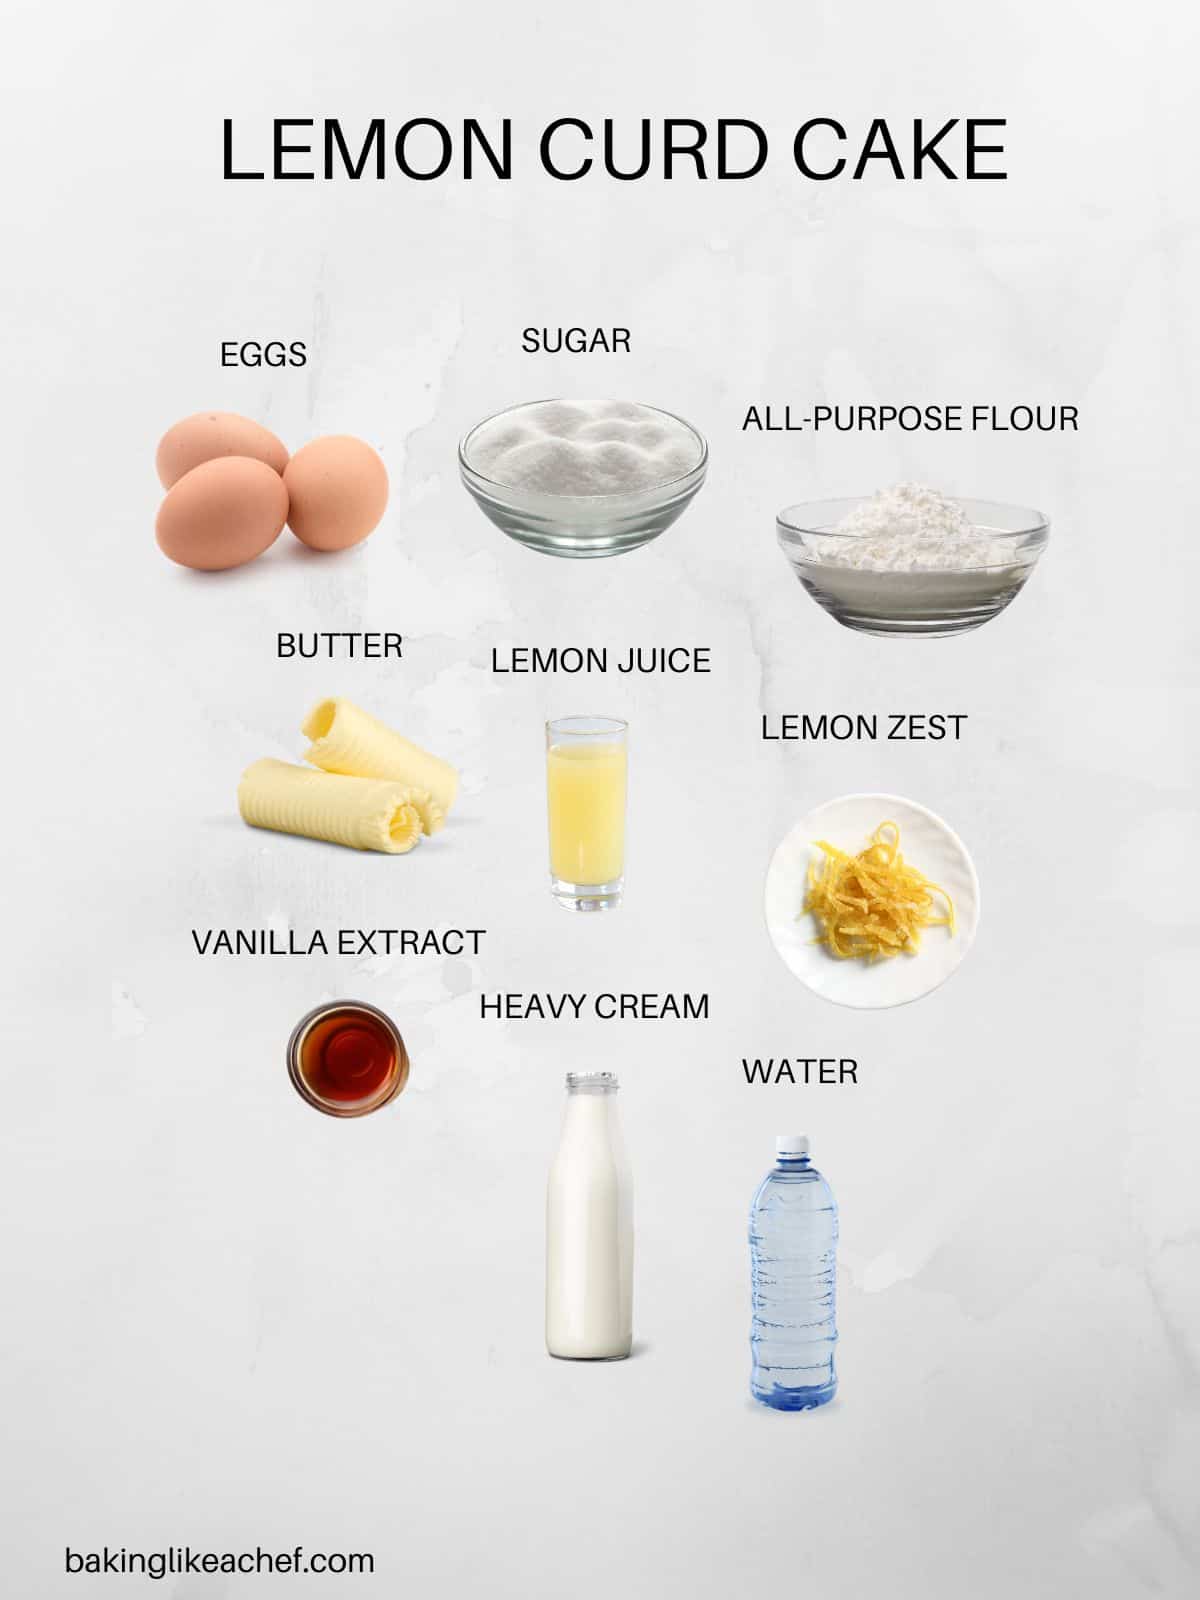 Lemon curd cake ingredients in pictures